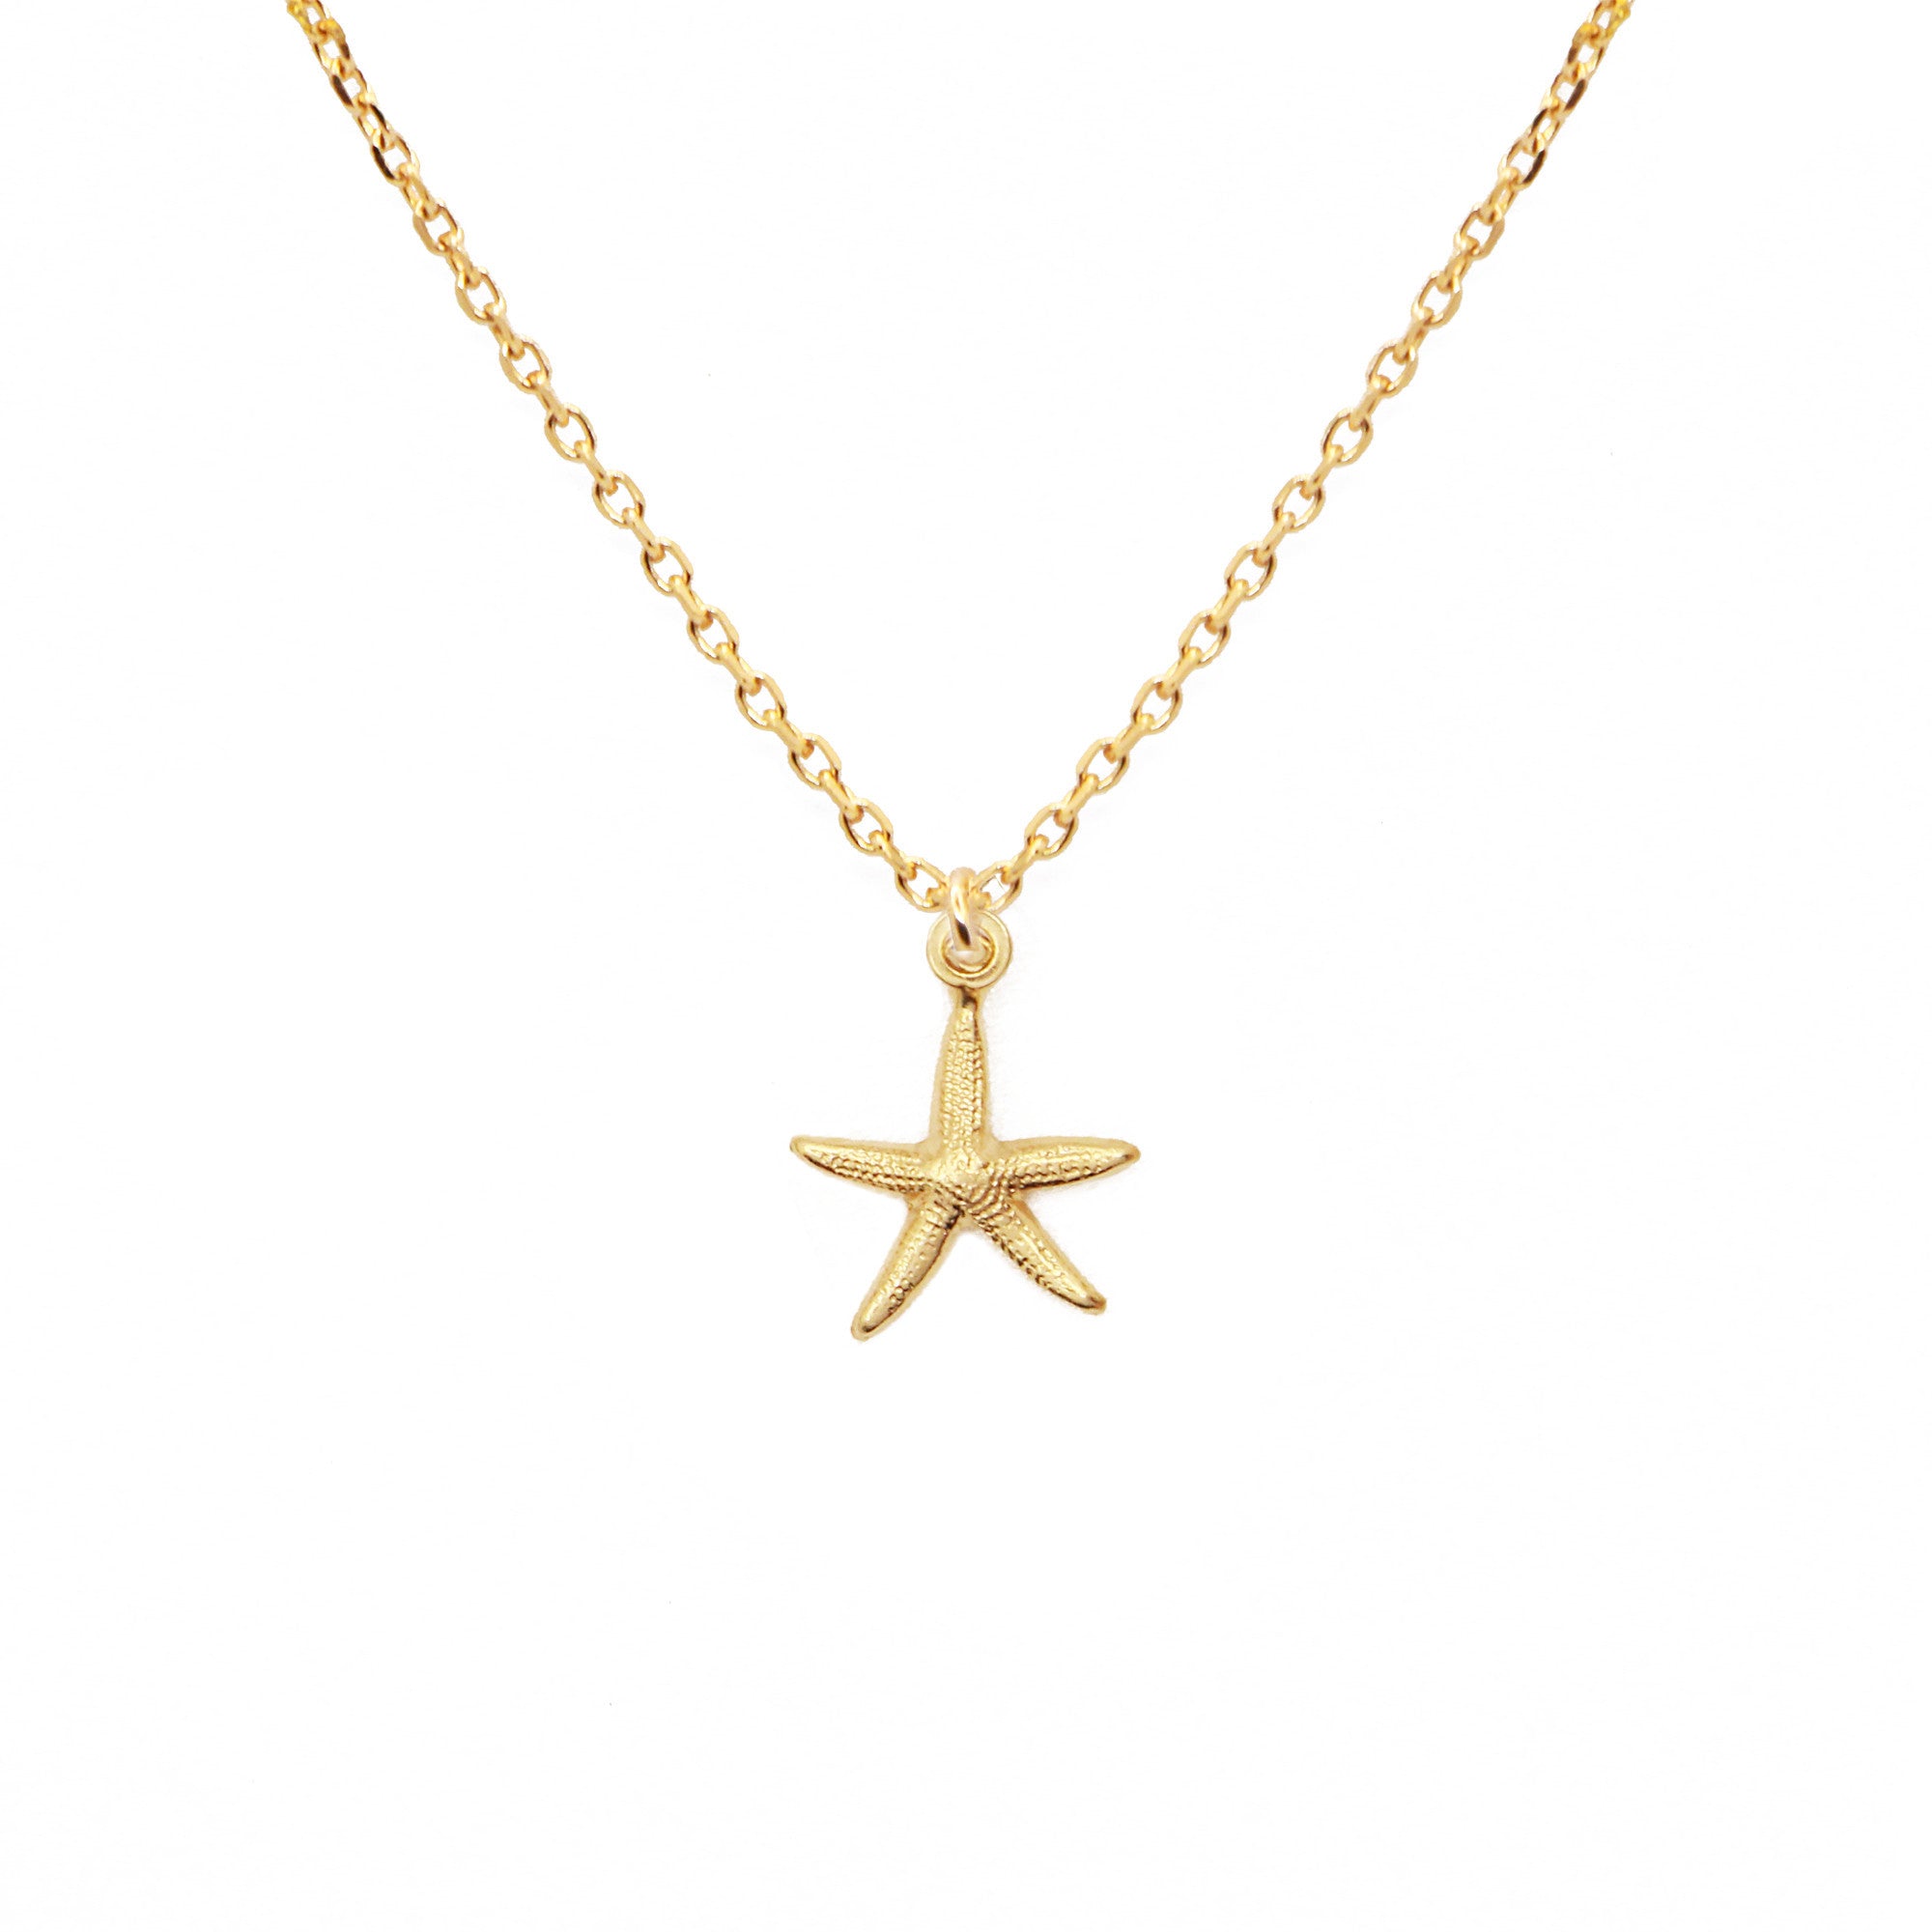 Starfish charm chain necklace